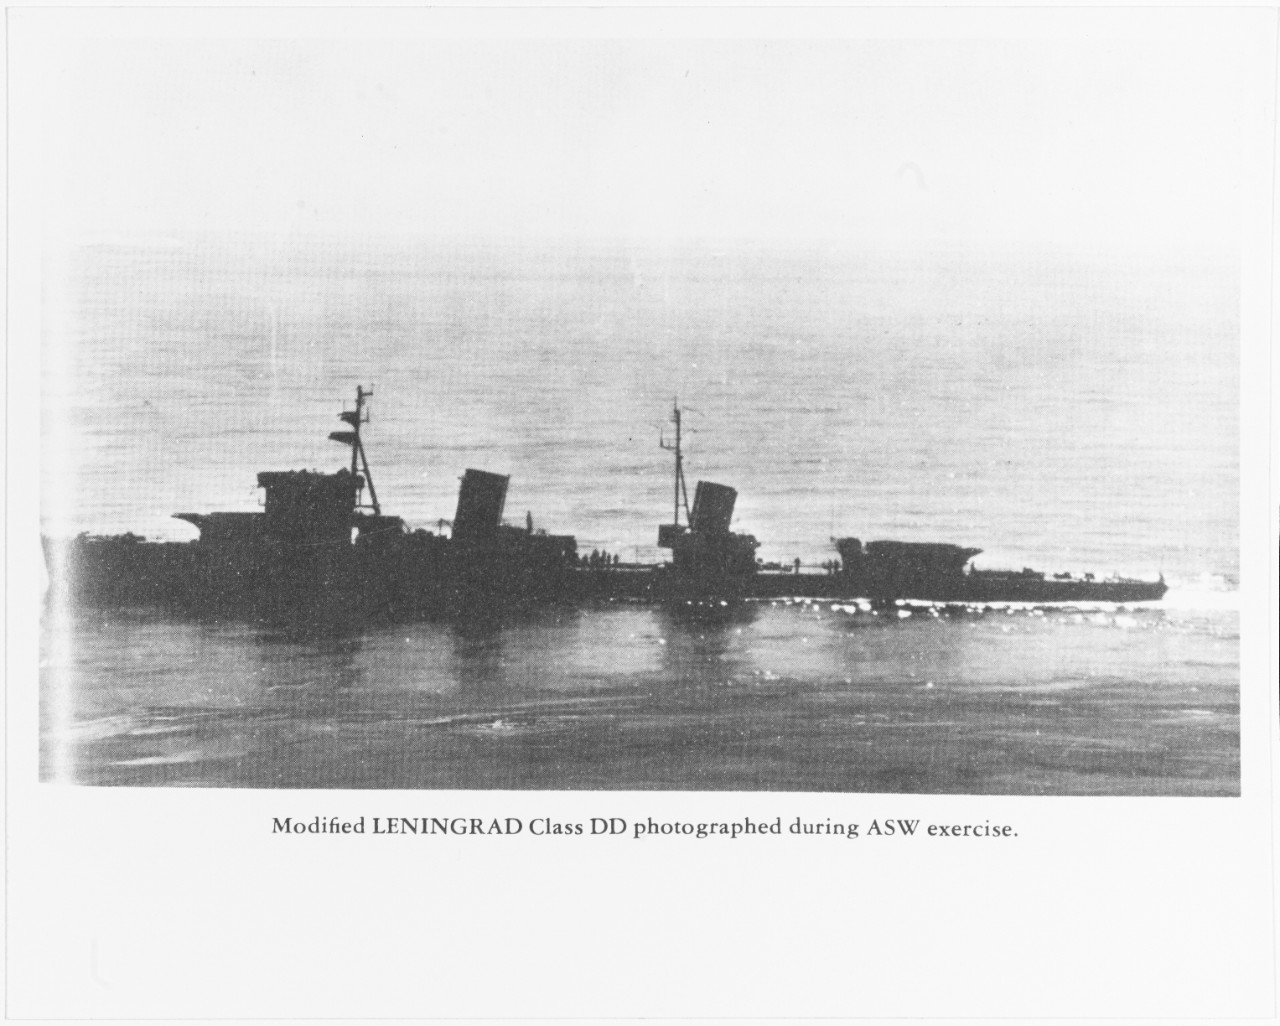 Soviet LENINGRAD class destroyer leader in the Pacific, 1958